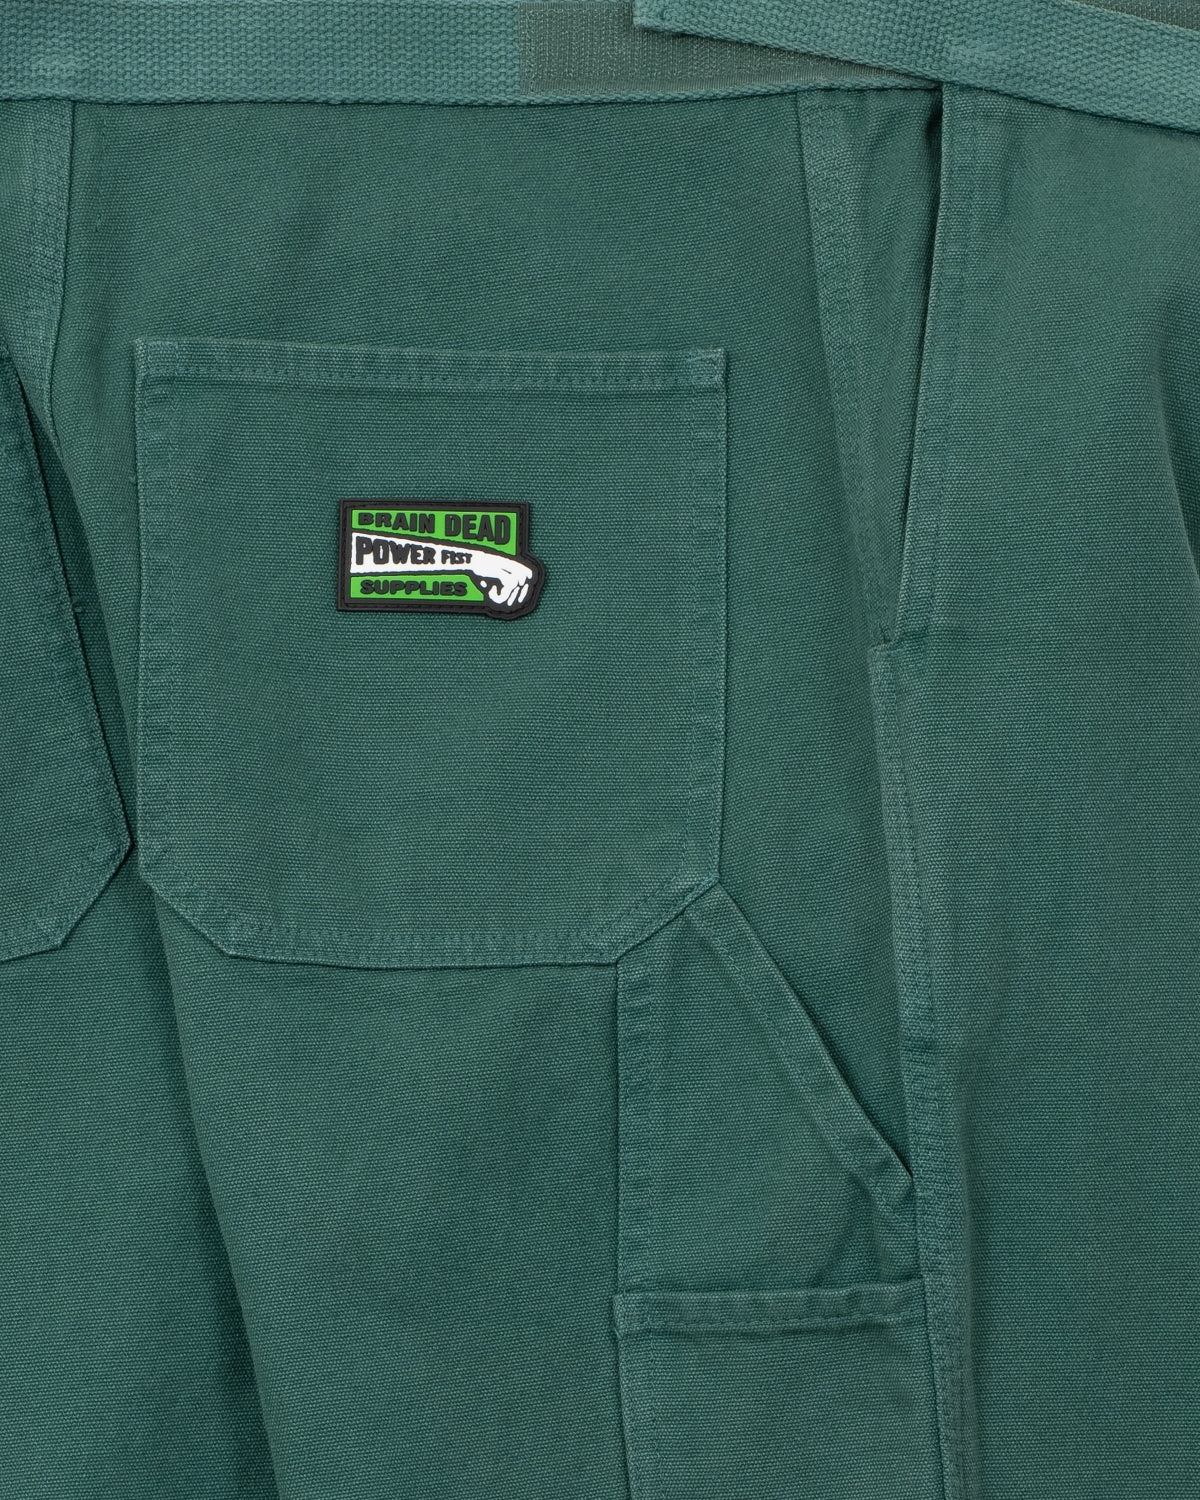 Washed Hard Ware/ Soft Wear Carpenter Pant - Green